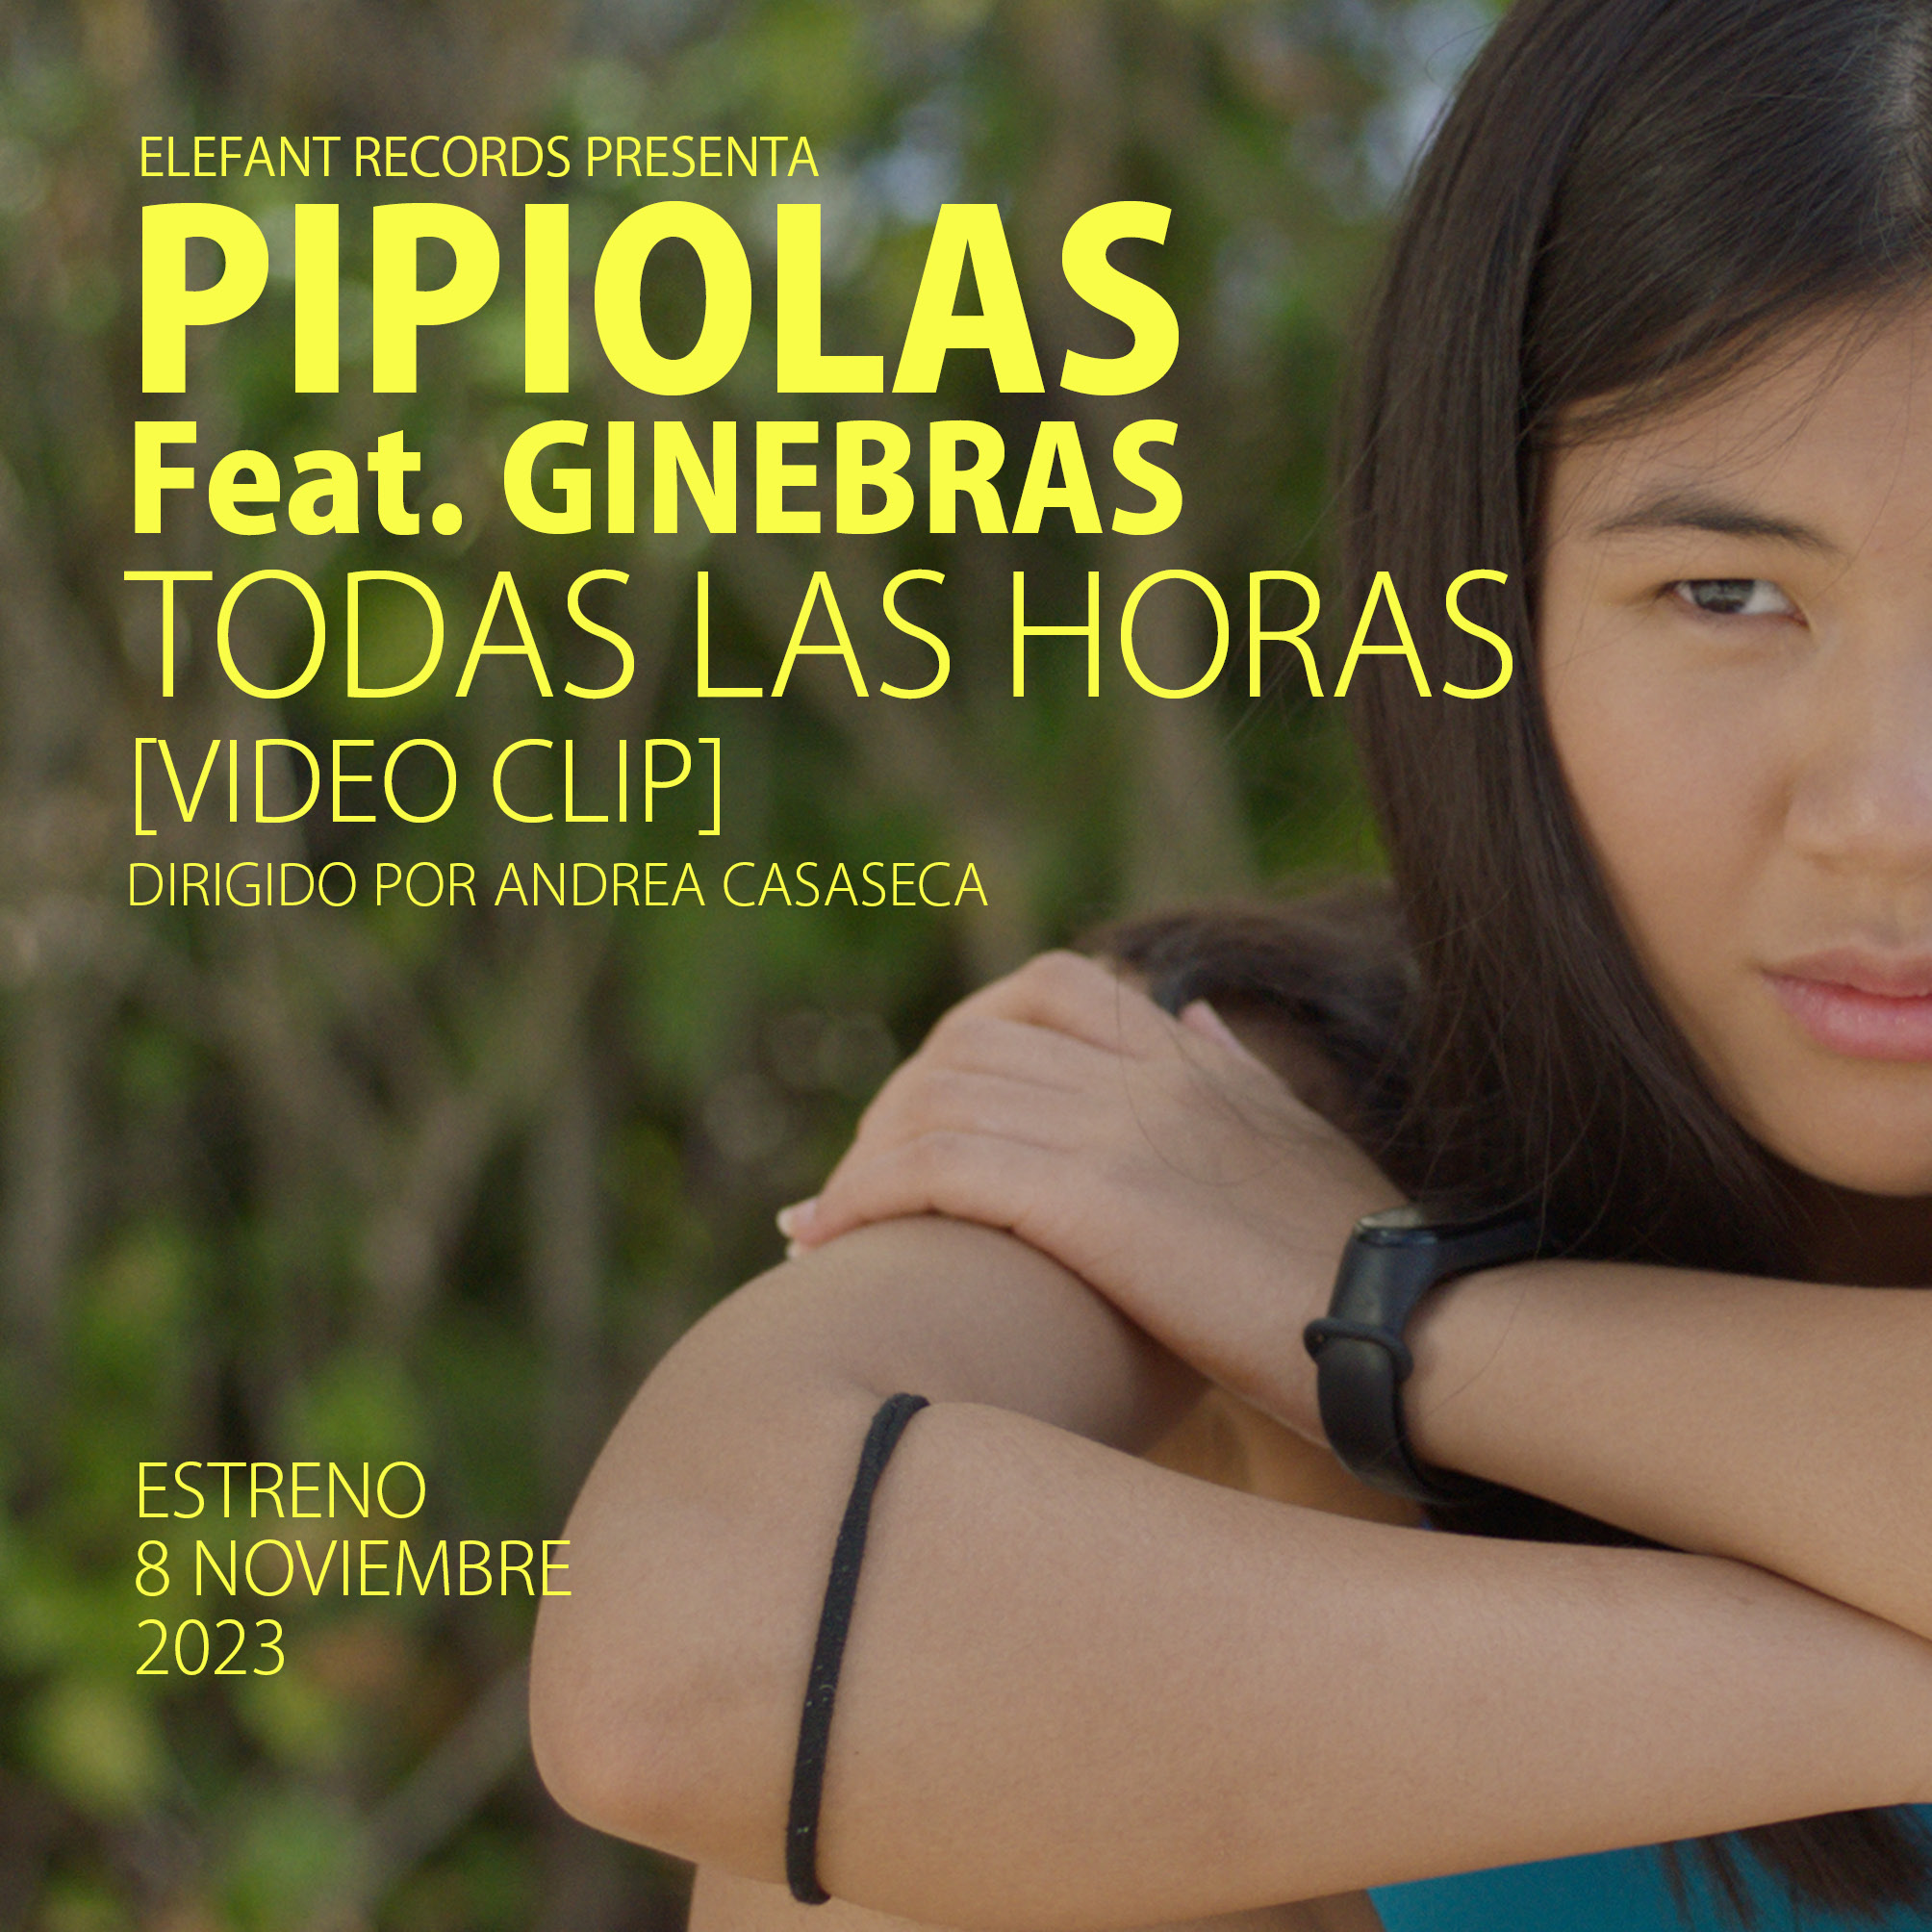 PIPIOLAS (feat. GINEBRAS) "Todas Las Horas" Single Digital